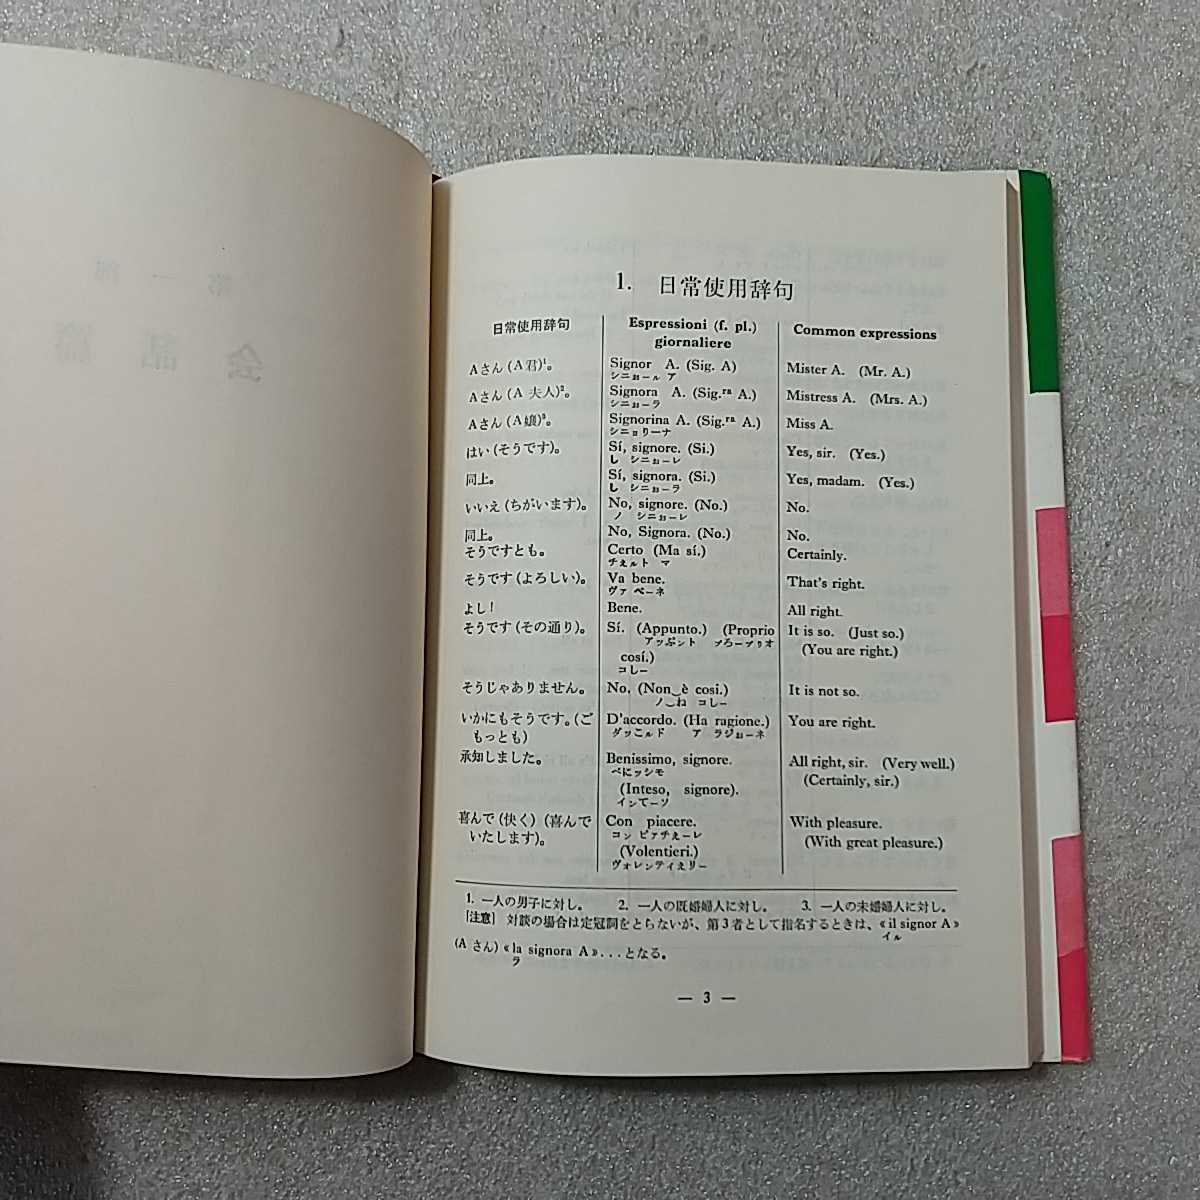 zaa-331! Italian grammar - conversation . composition Pele ti( work )iesz. Kobe six . pavilion centre publish company 1972/7/30